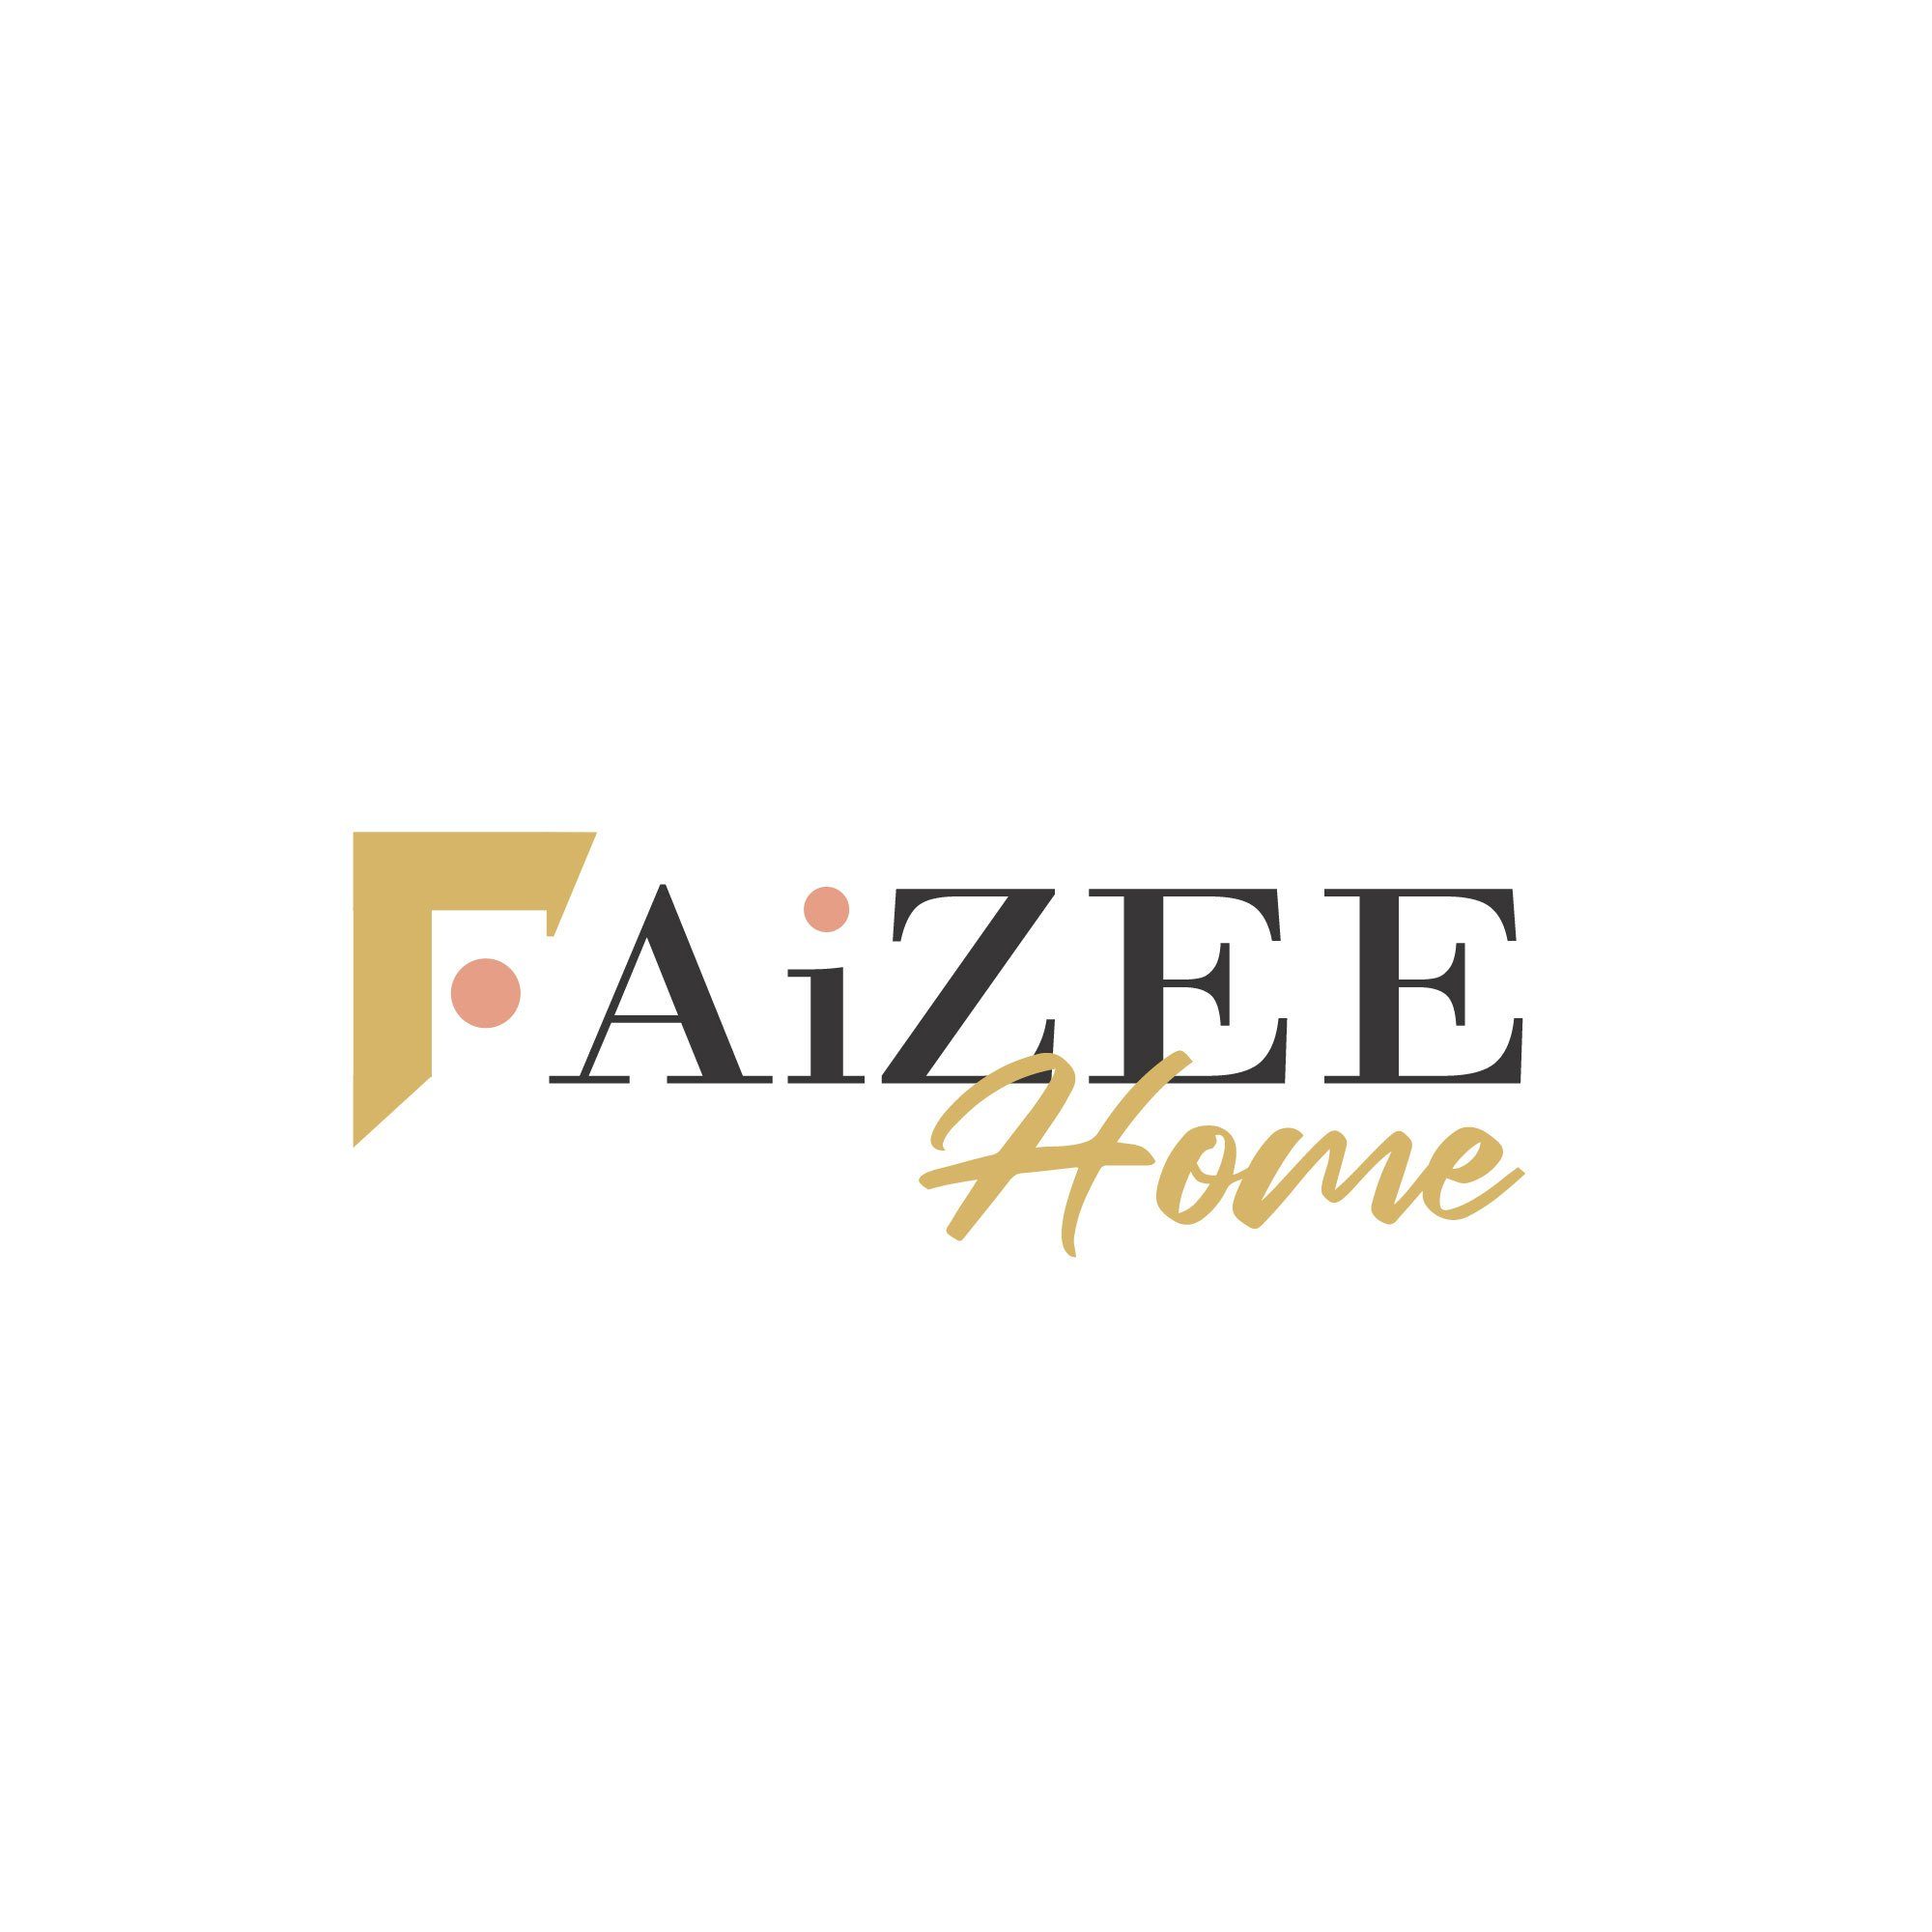 Faizee Home